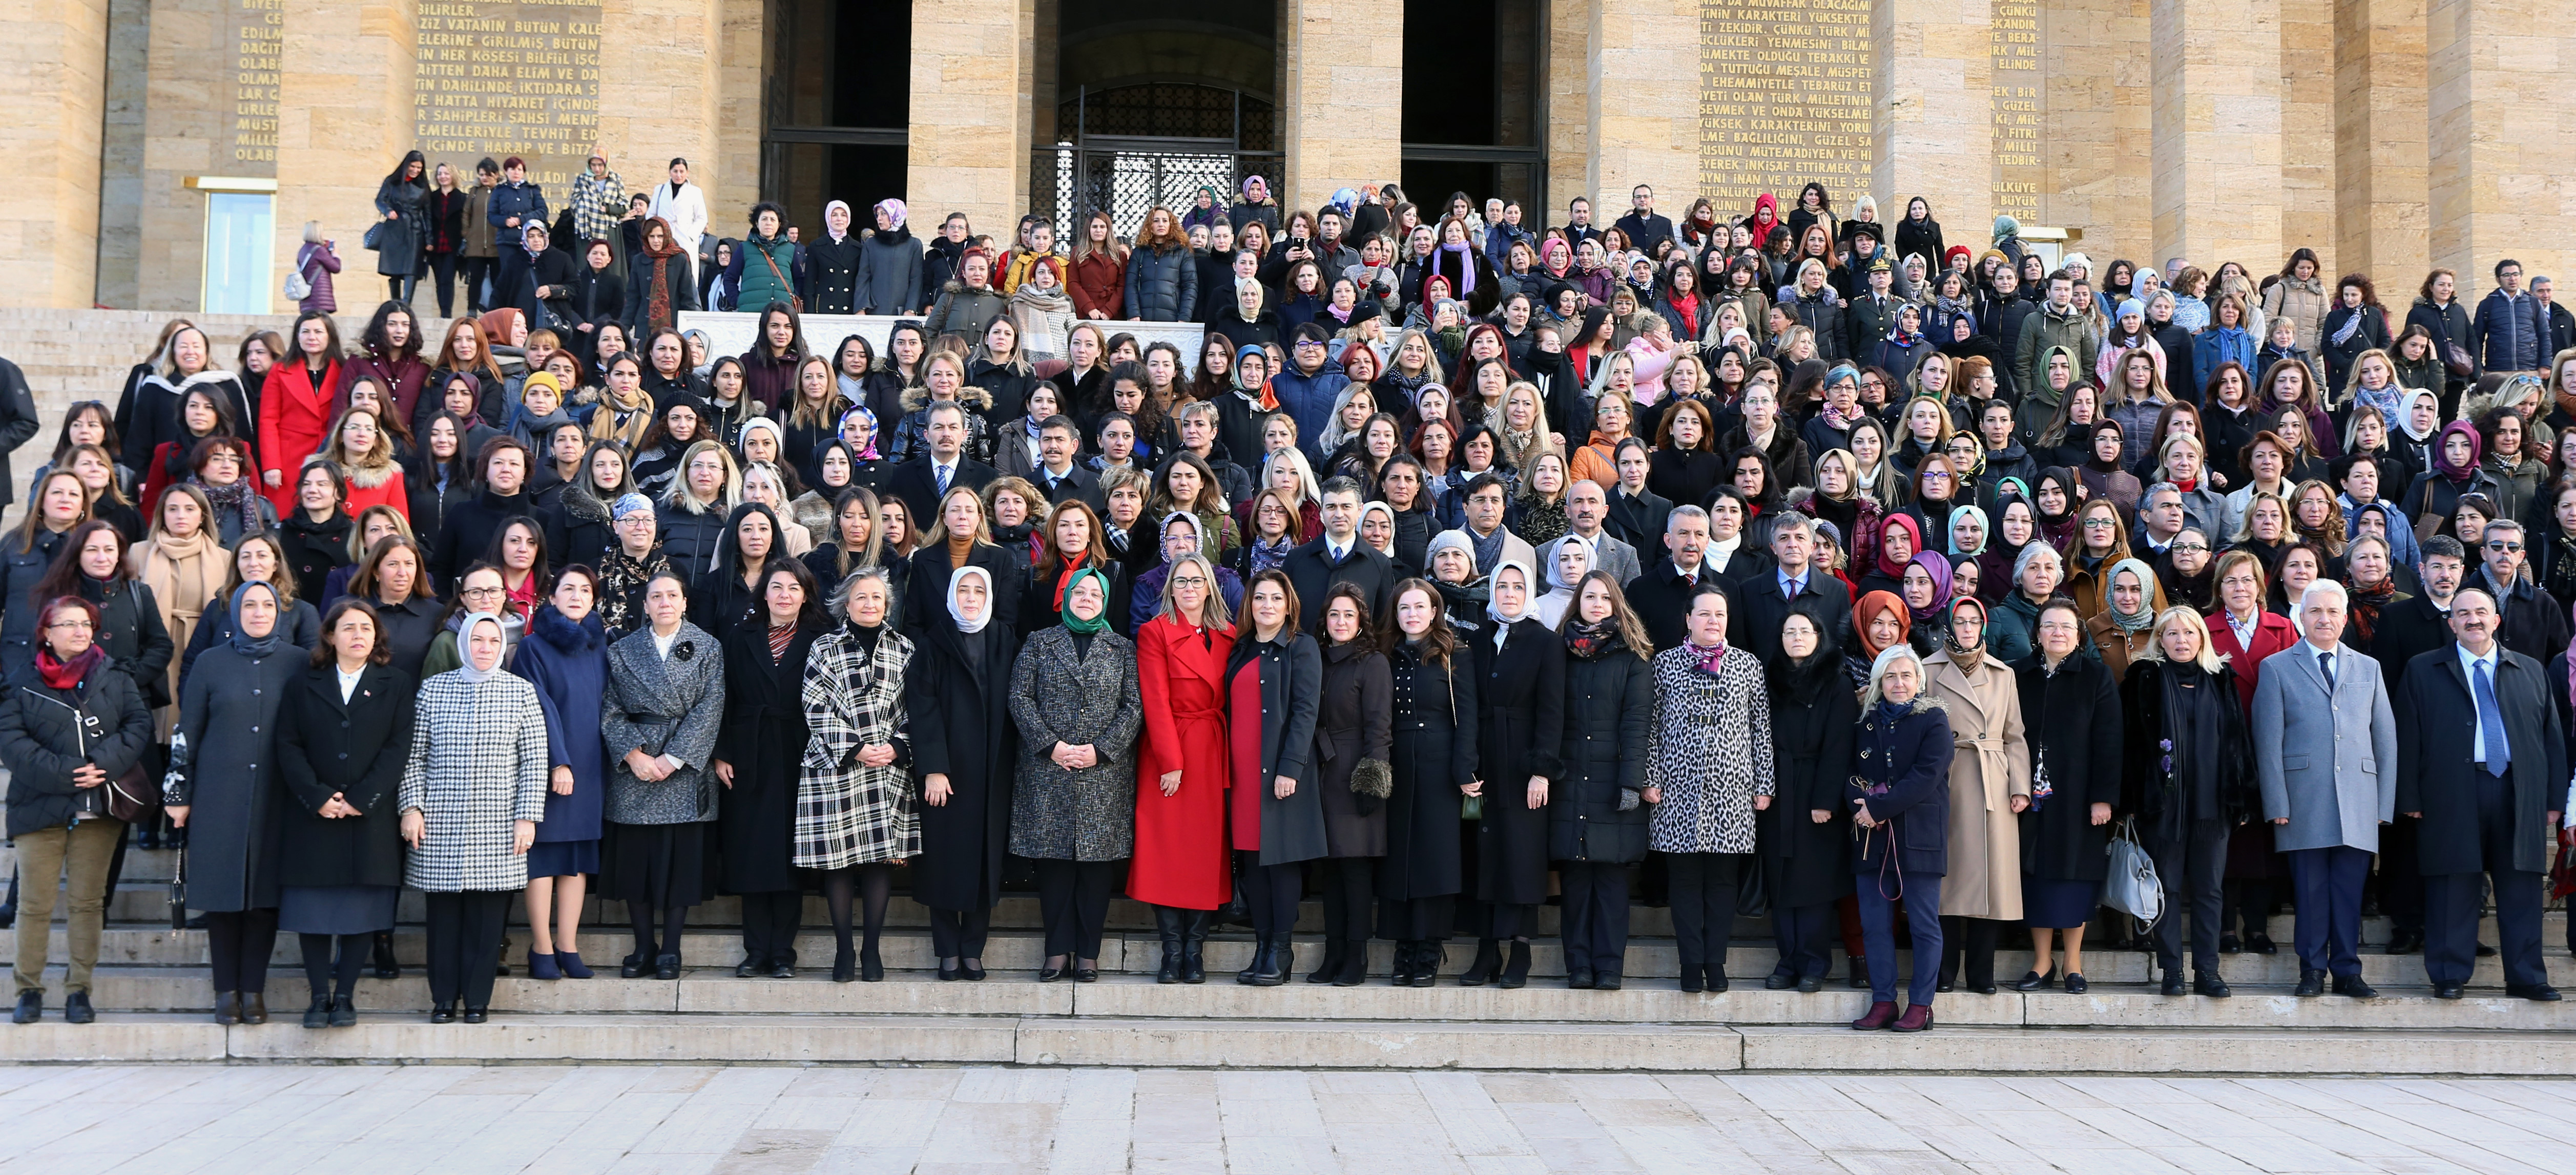 Turkish women celebrate 85th anniversary of suffrage